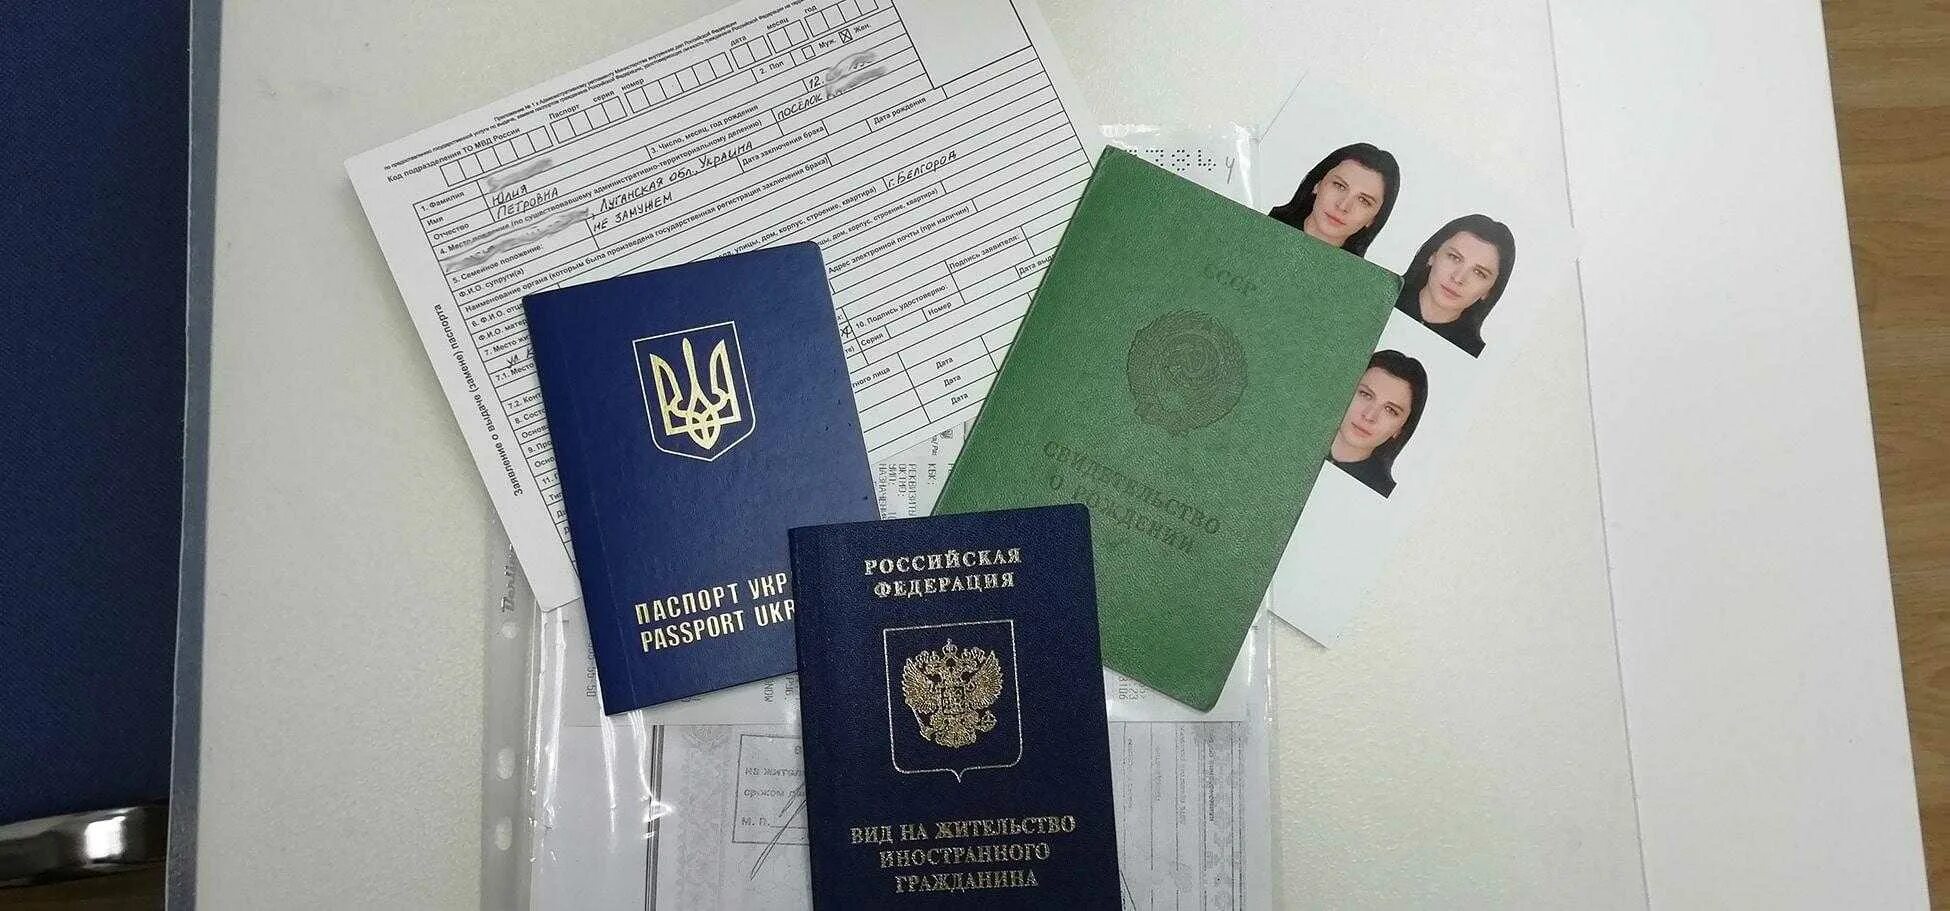 Лица с внж. Вид на жительство. Вид на жительство в России. ВНЖ документ. Вид на жительство иностранного гражданина.